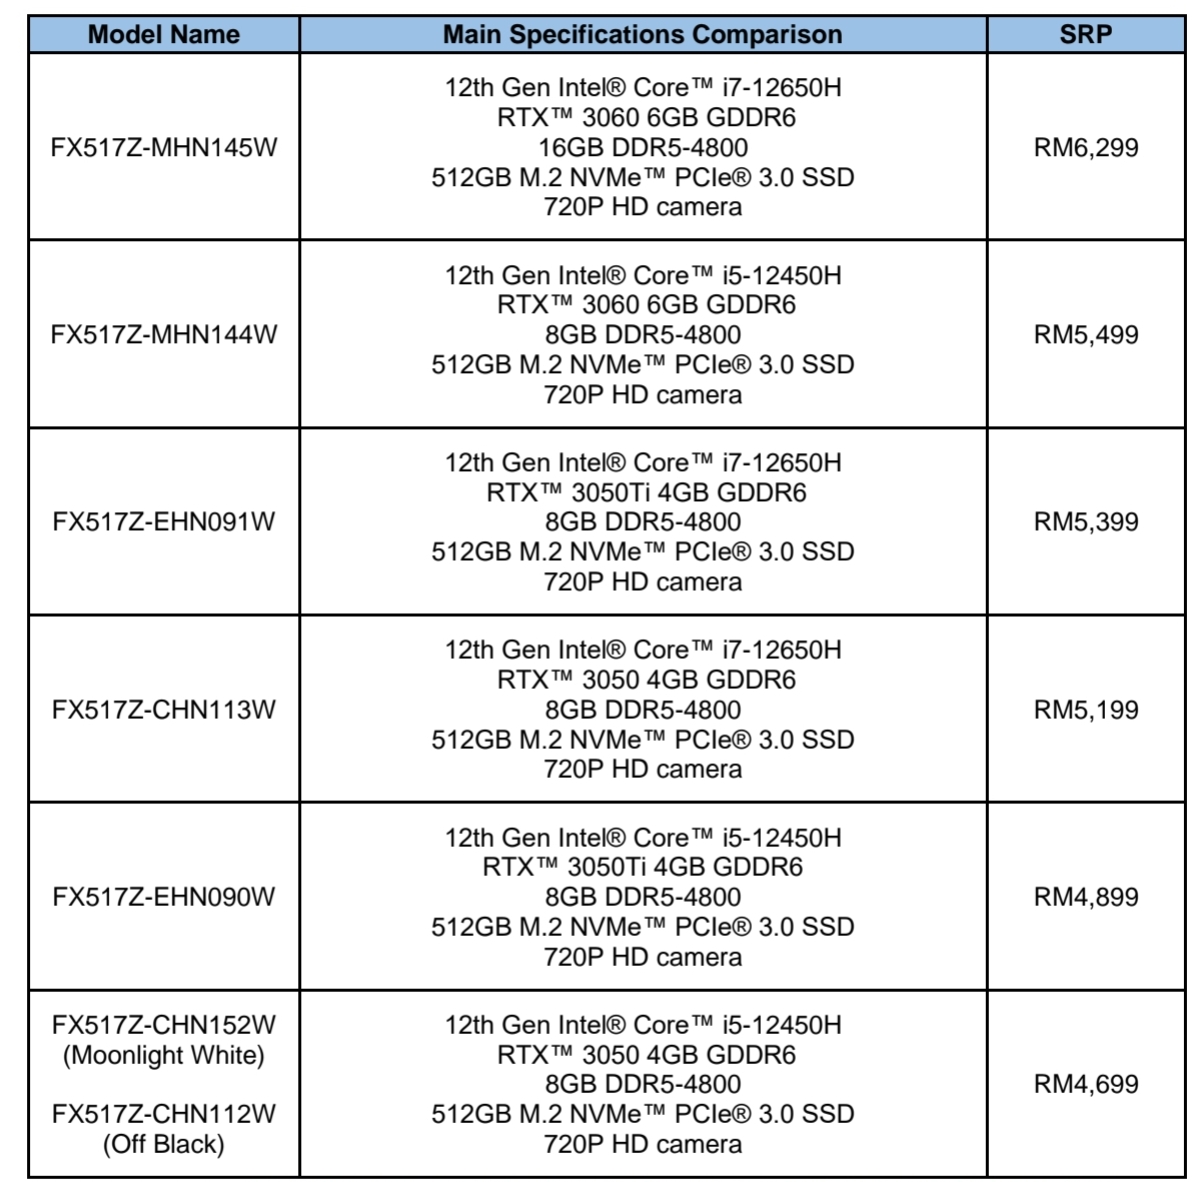 Komputer Riba Gaming ASUS TUF Dash F15 kini rasmi di Malaysia pada harga dari RM 4,699 9